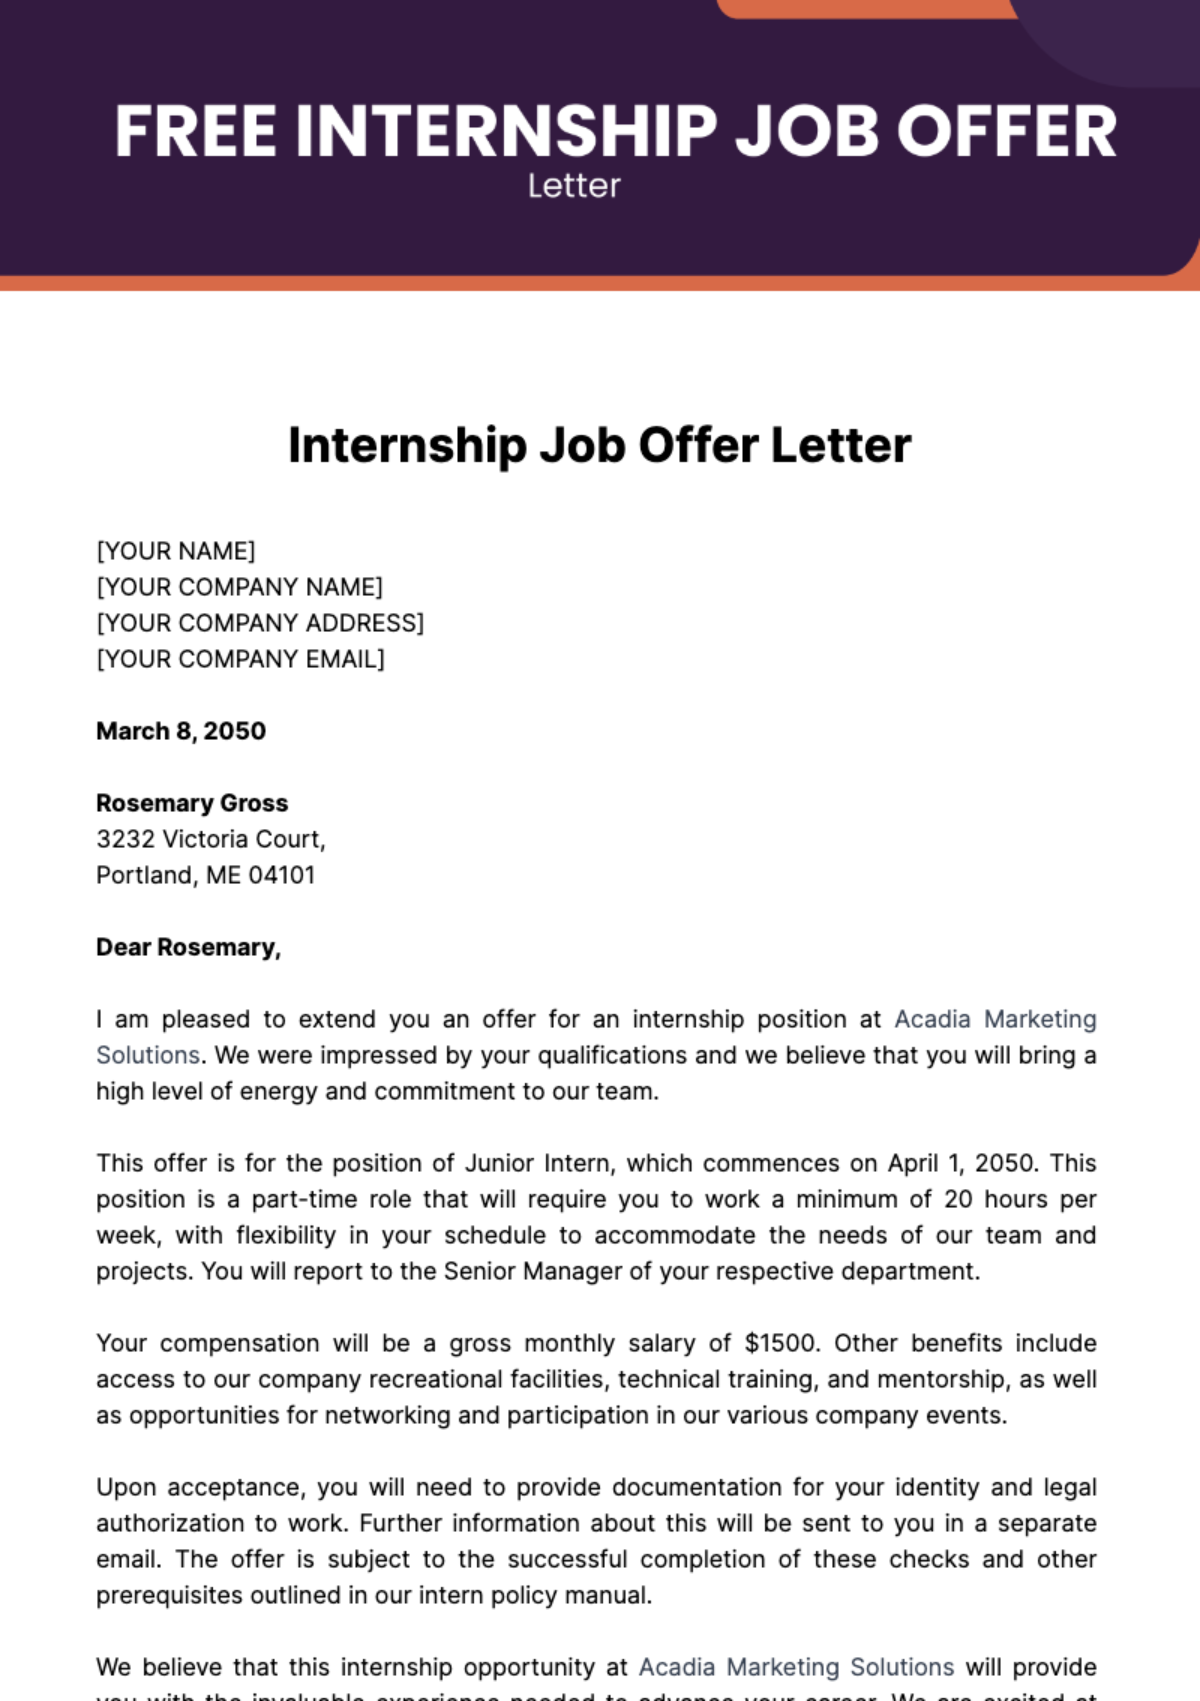 Free Internship Job Offer Letter Template